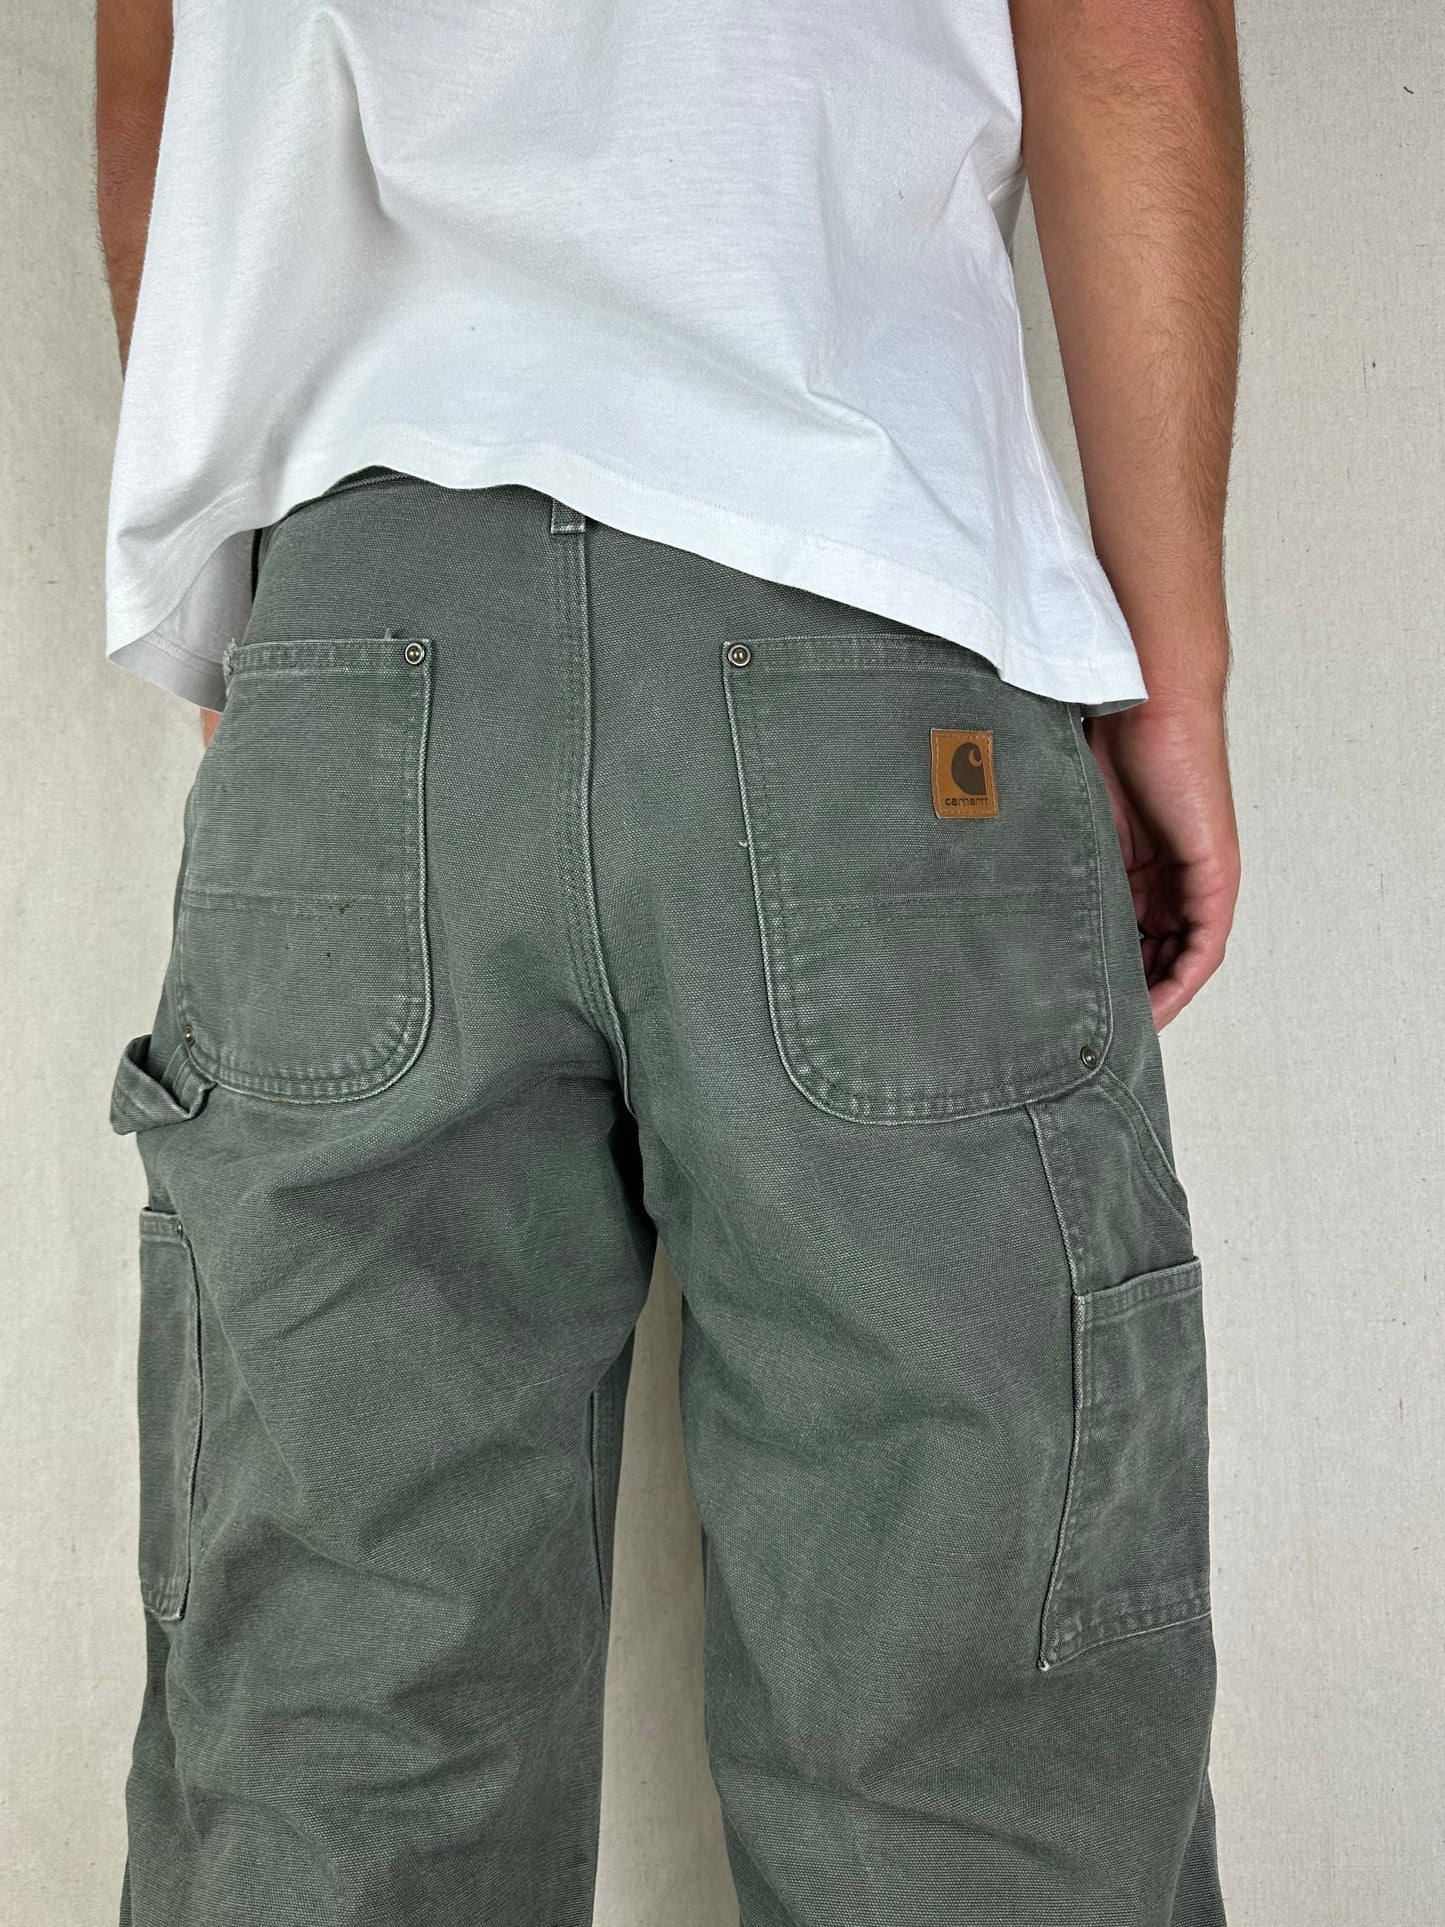 90's Carhartt Heavy Duty Double Knee Vintage Carpenter Jeans Size 31x32